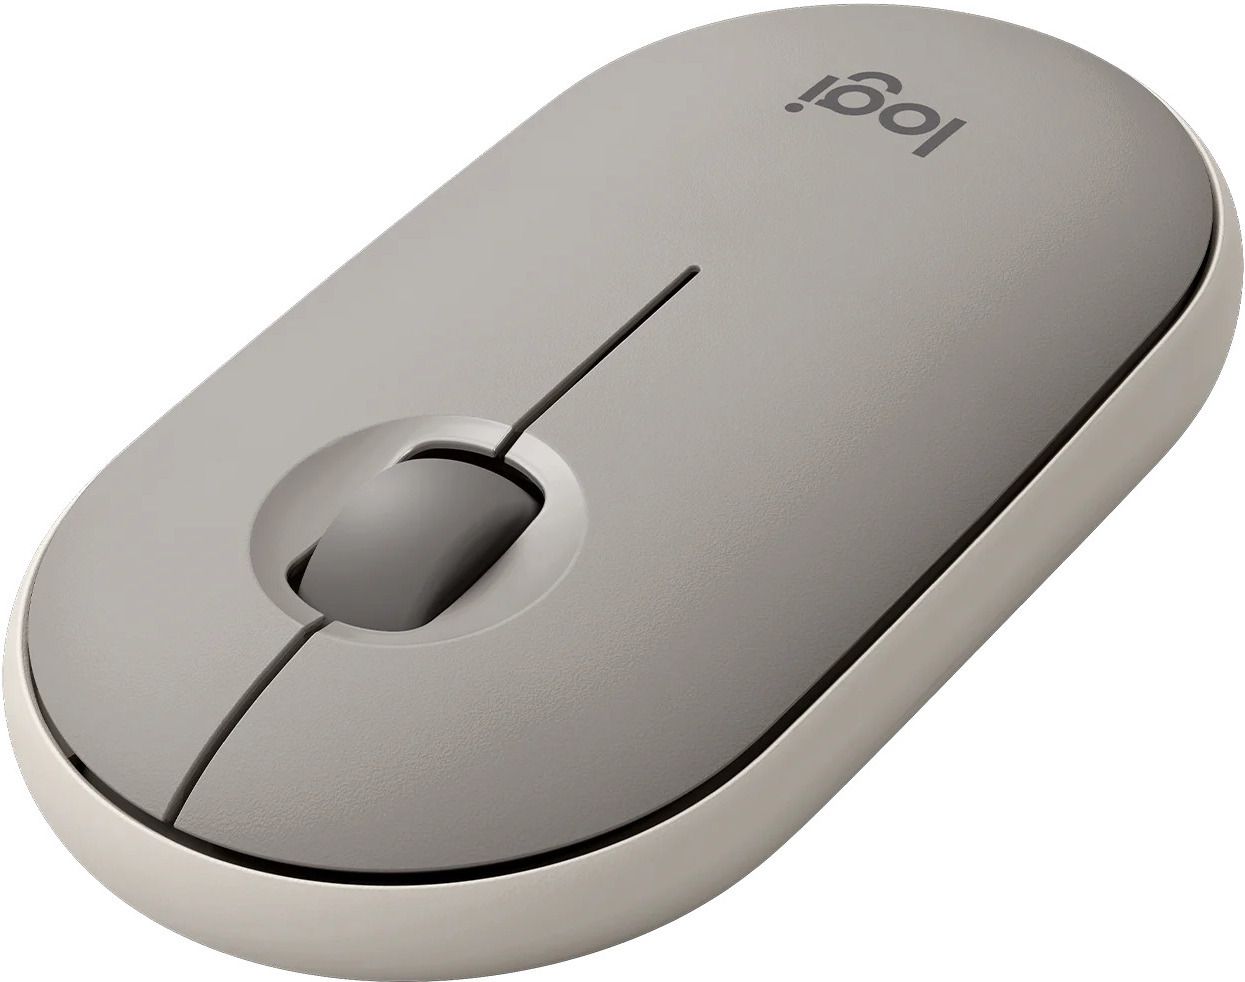 LOGITECH Pebble M350 Wireless Mouse - SAND